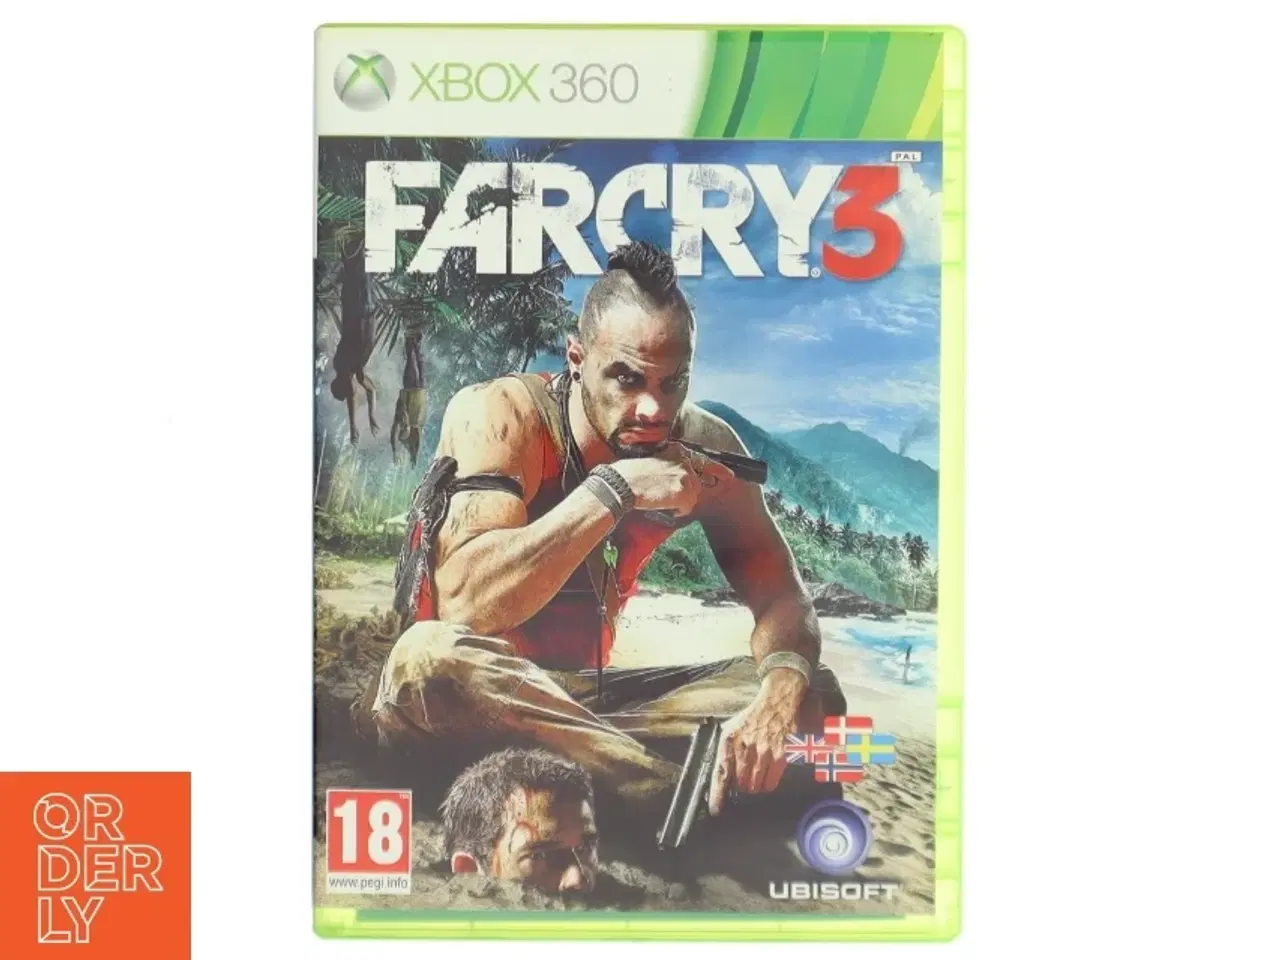 Billede 1 - Far Cry 3 fra x box